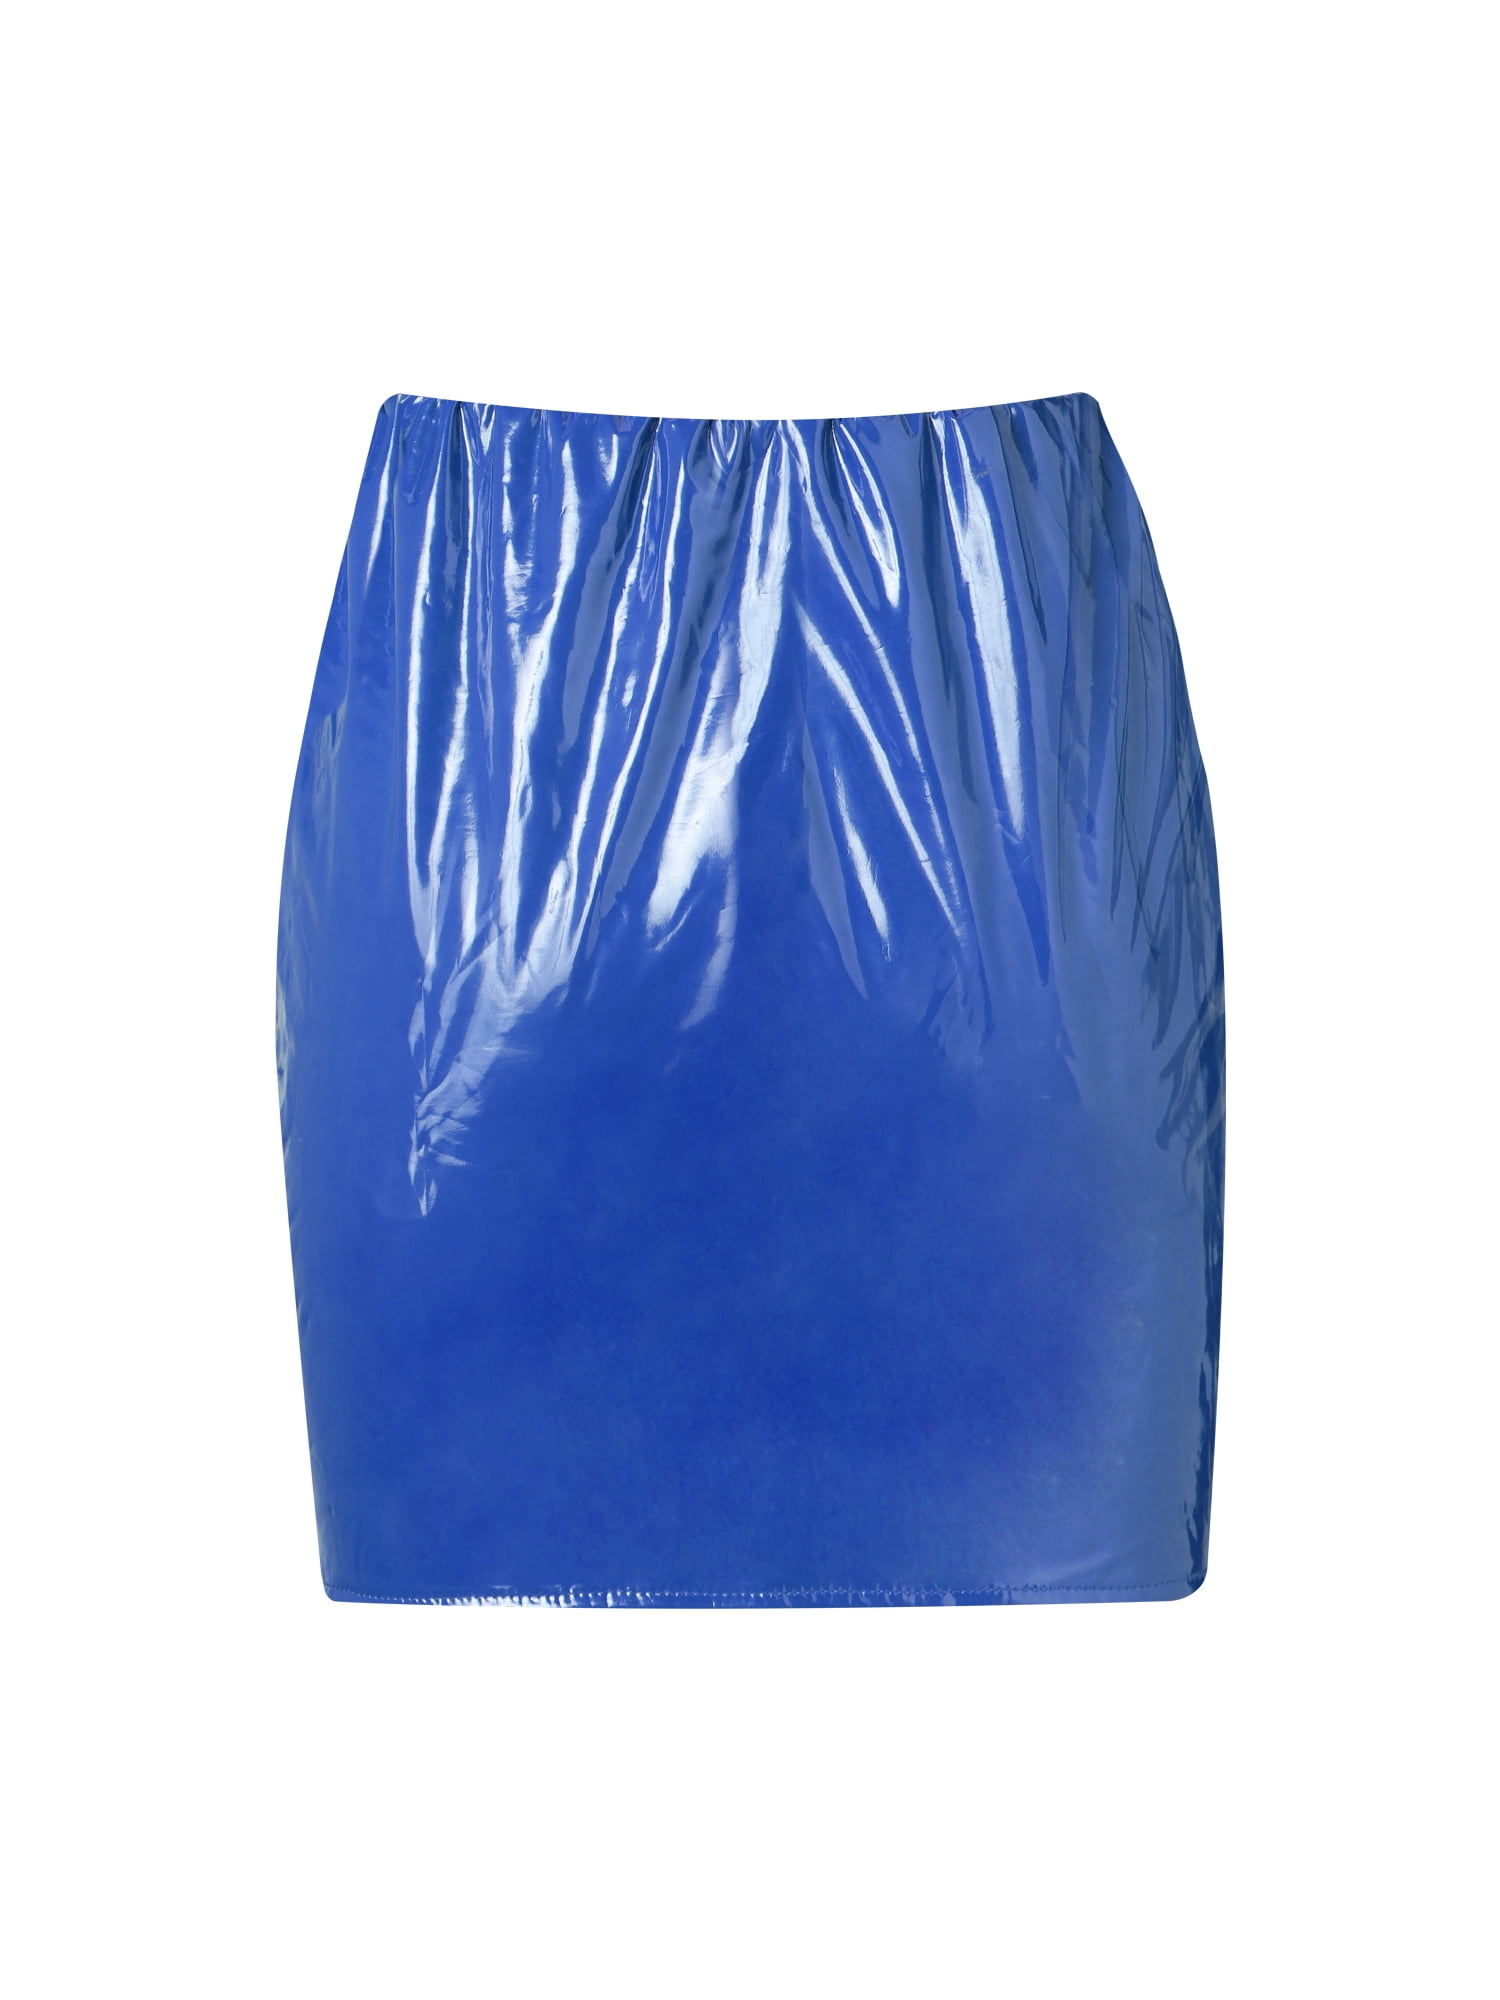 ZIYIXIN Women Neon Leather Bodycon Mini Skirt Skirts Shiny Liquid ...